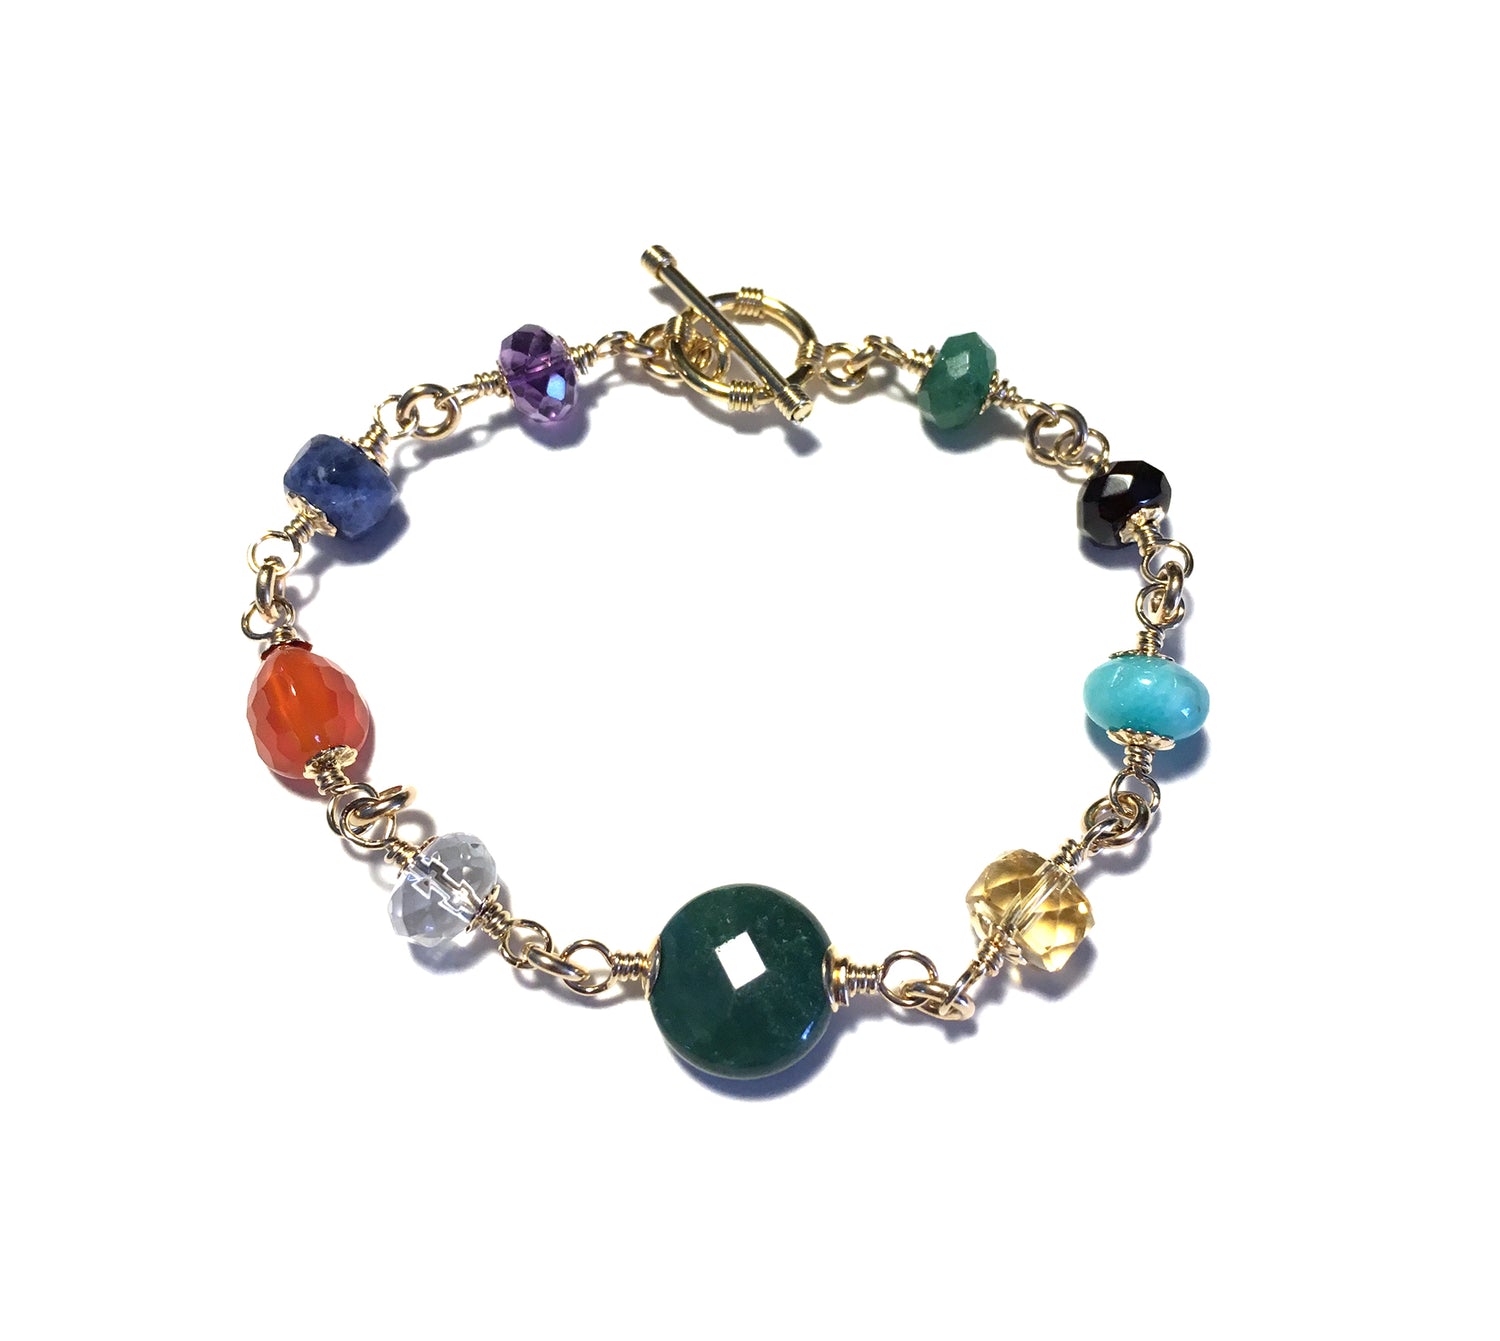 7 Chakra Bracelets, 14K GF Asymmetrical Mindfulness Gift, Real Crystals Gemstone Meditation Gifts B7007